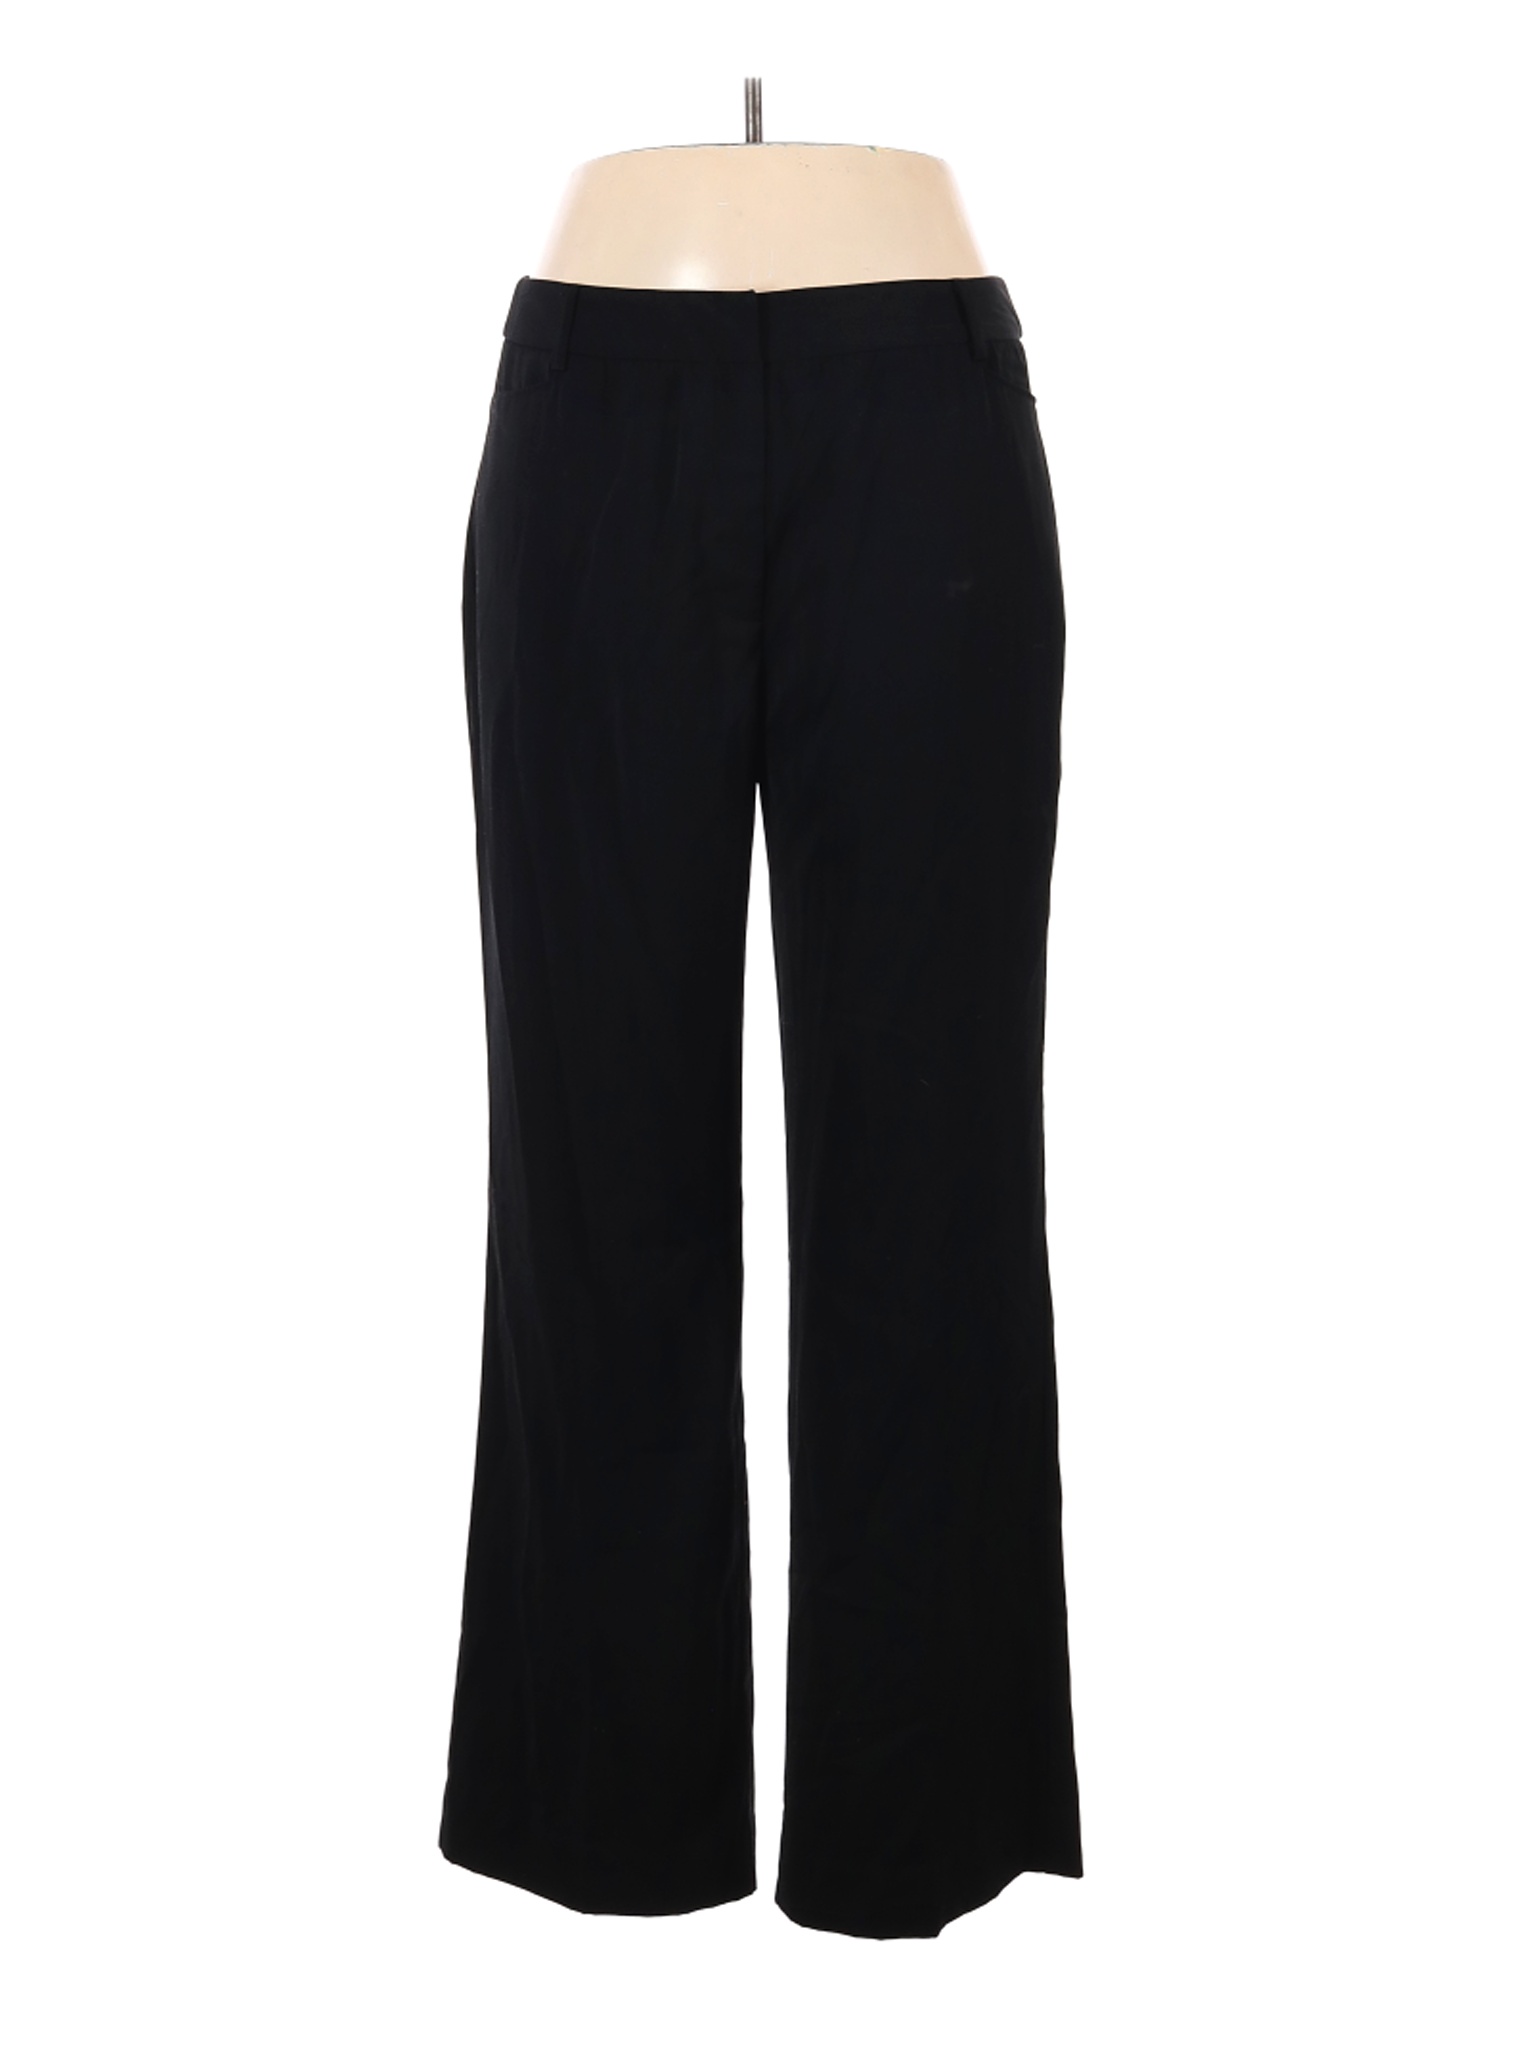 MULTIPLES Women Black Dress Pants 16 | eBay